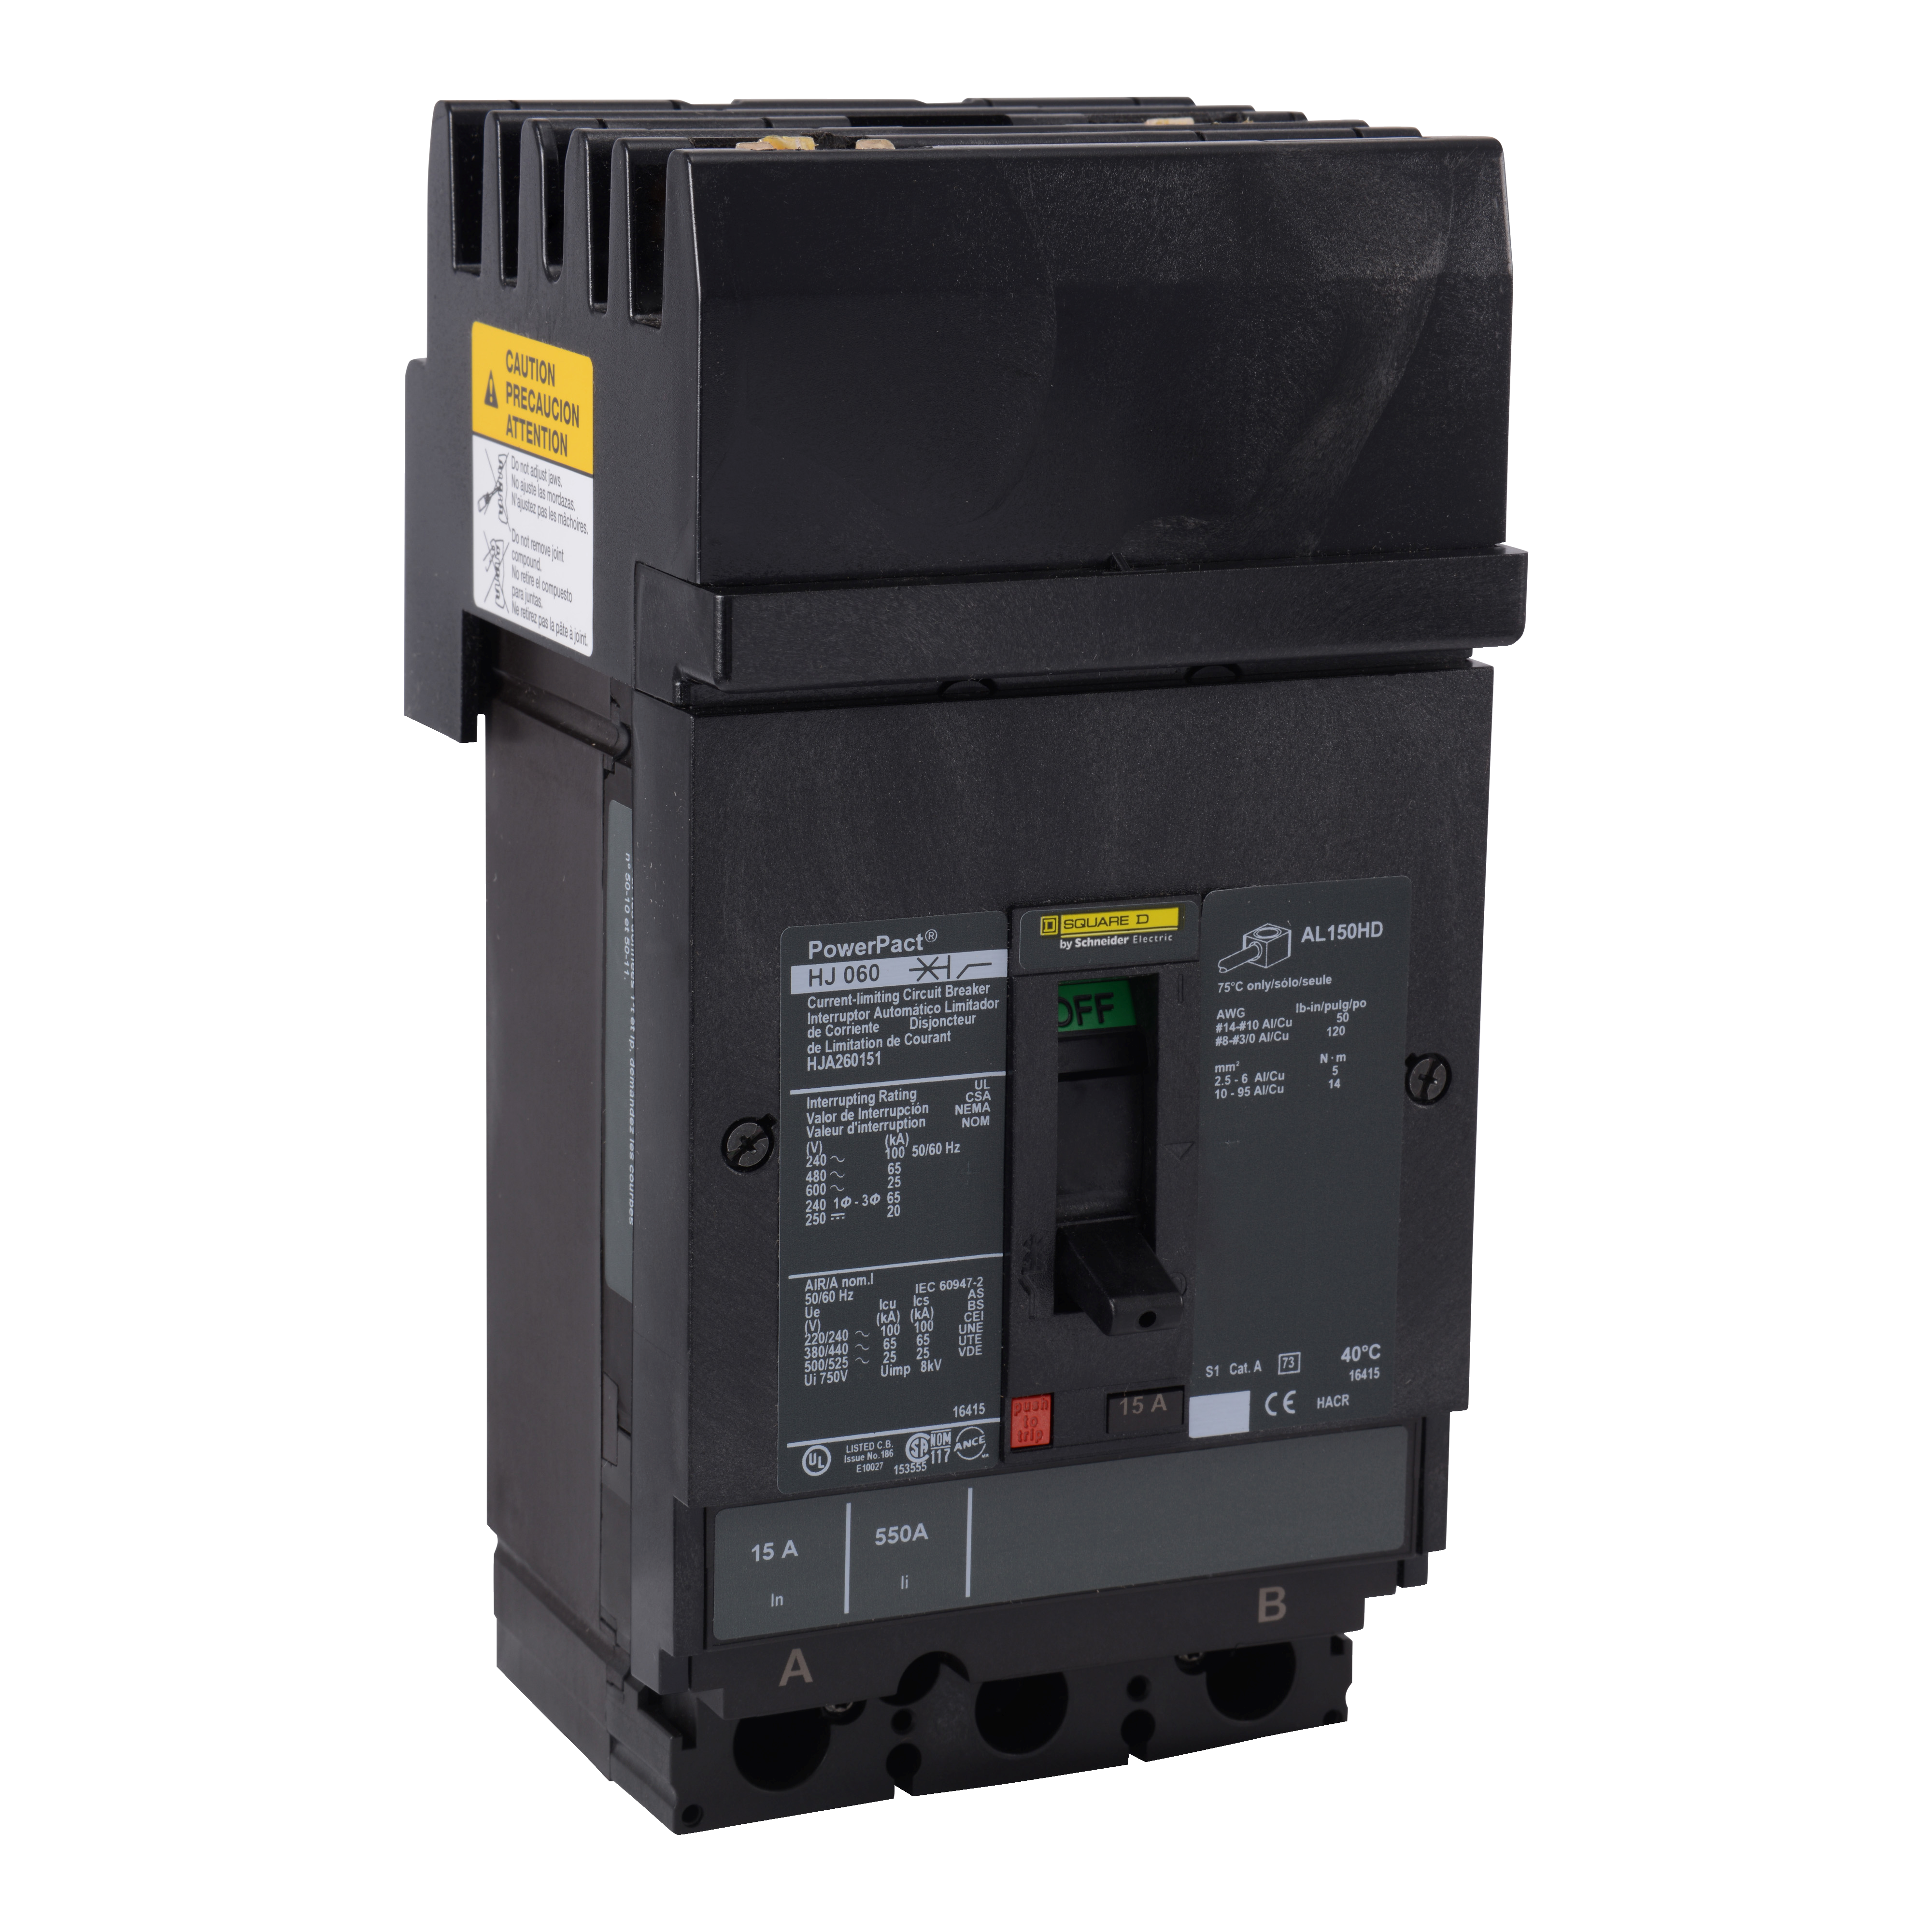 Circuit breaker, PowerPacT H, 25A, 2 pole, 600VAC, 25kA, I-Line, thermal magnetic, 80%, AB